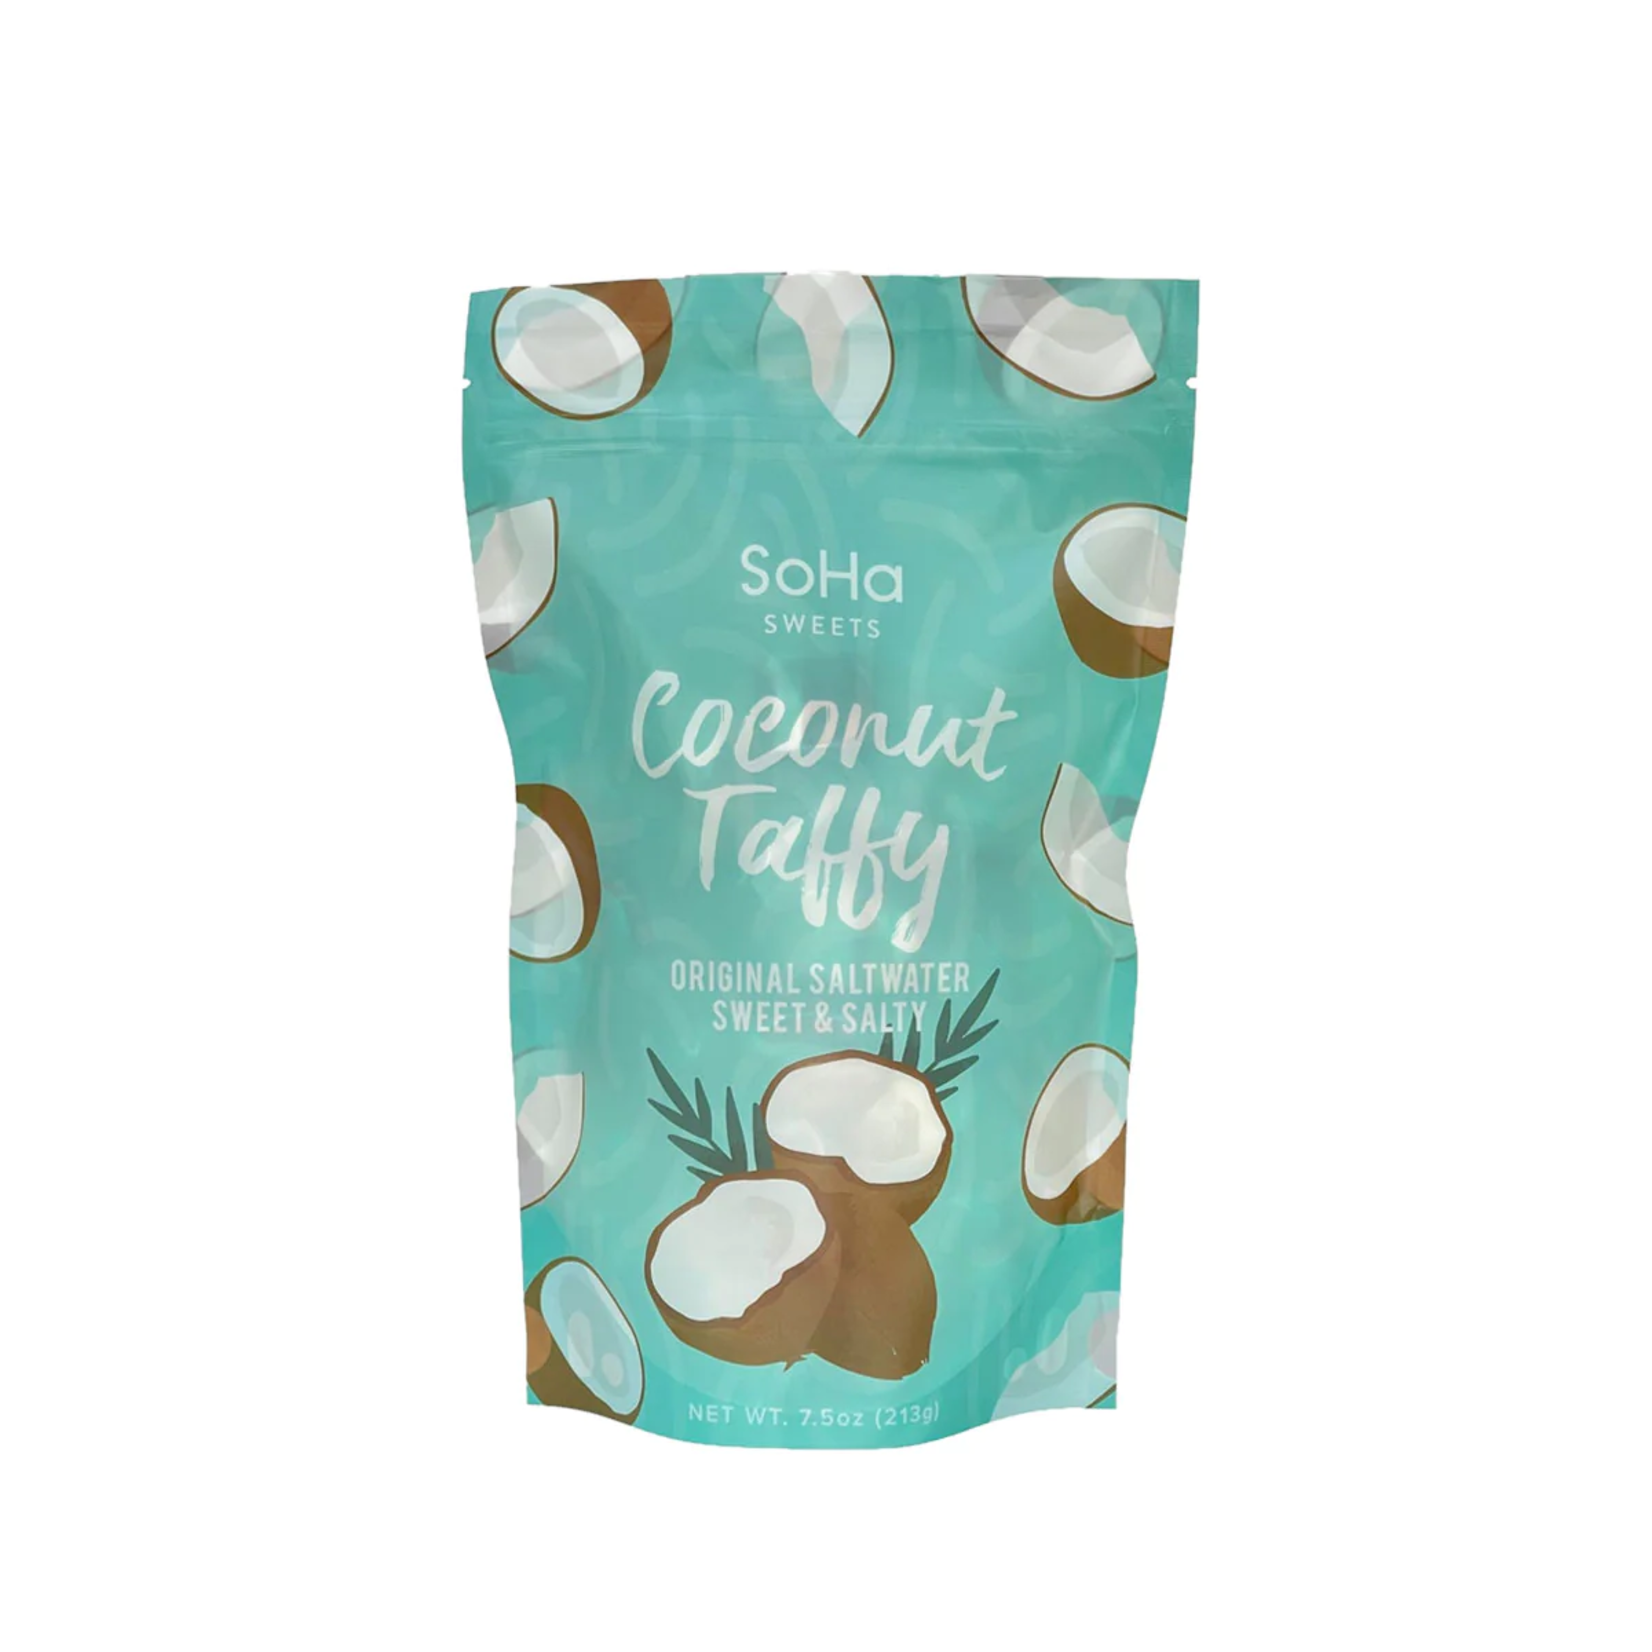 SoHa Sweets Saltwater Taffy: